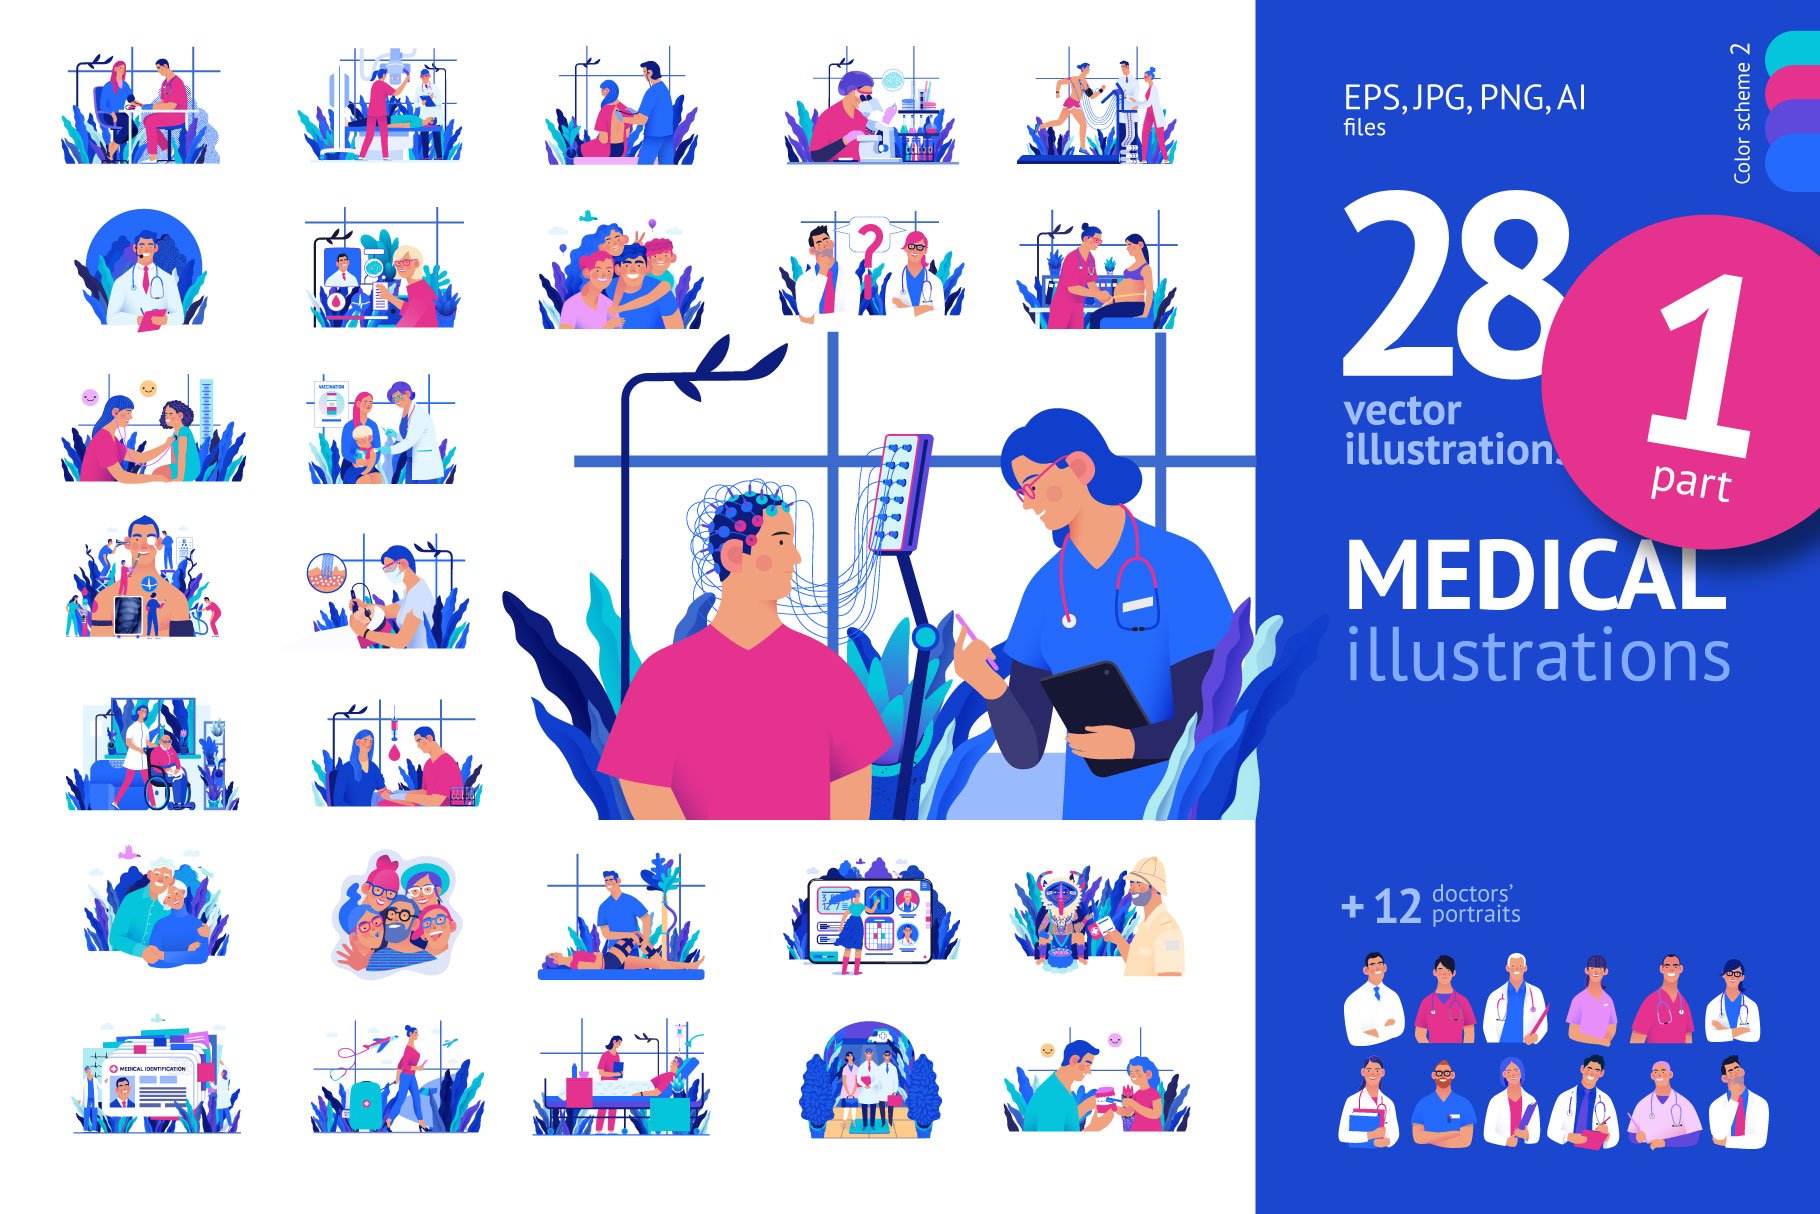 Part 1 Medical illustration, Color 2 cover image.